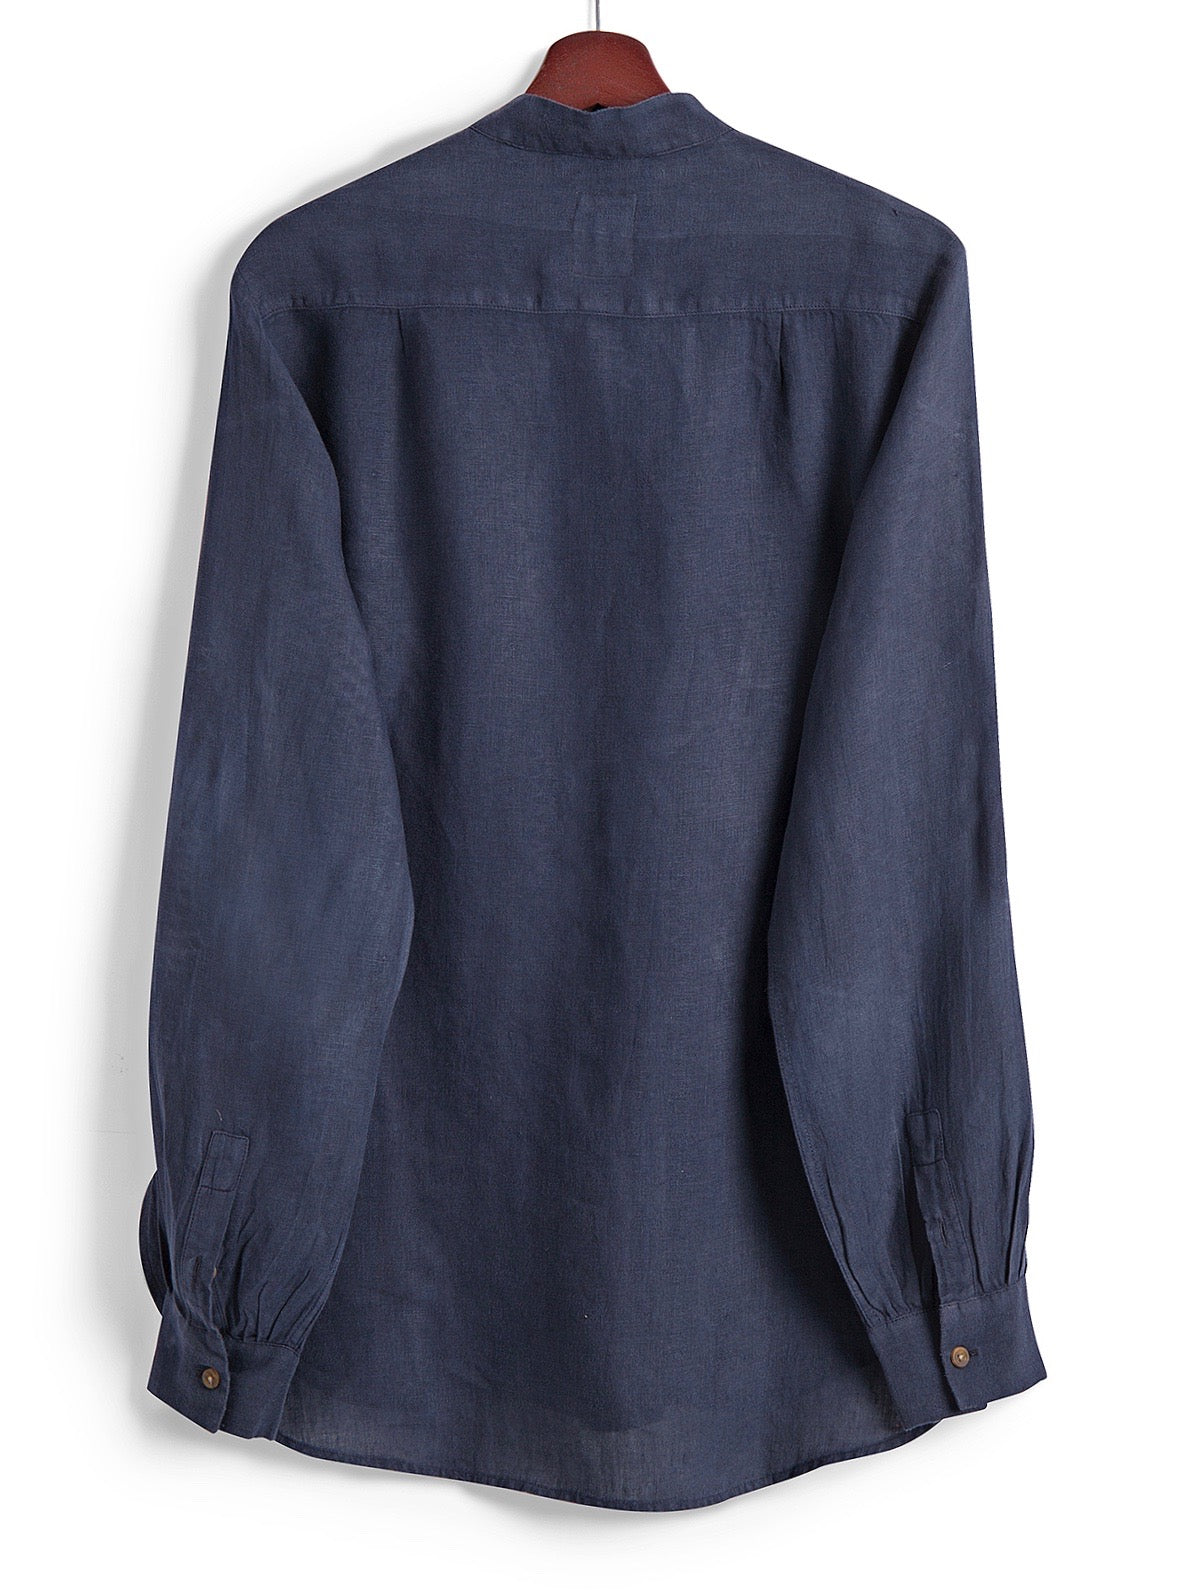 Bib Shirt in Navy Linen, Shirt, Hickman & Bousfied - Hickman & Bousfield, Safari and Travel Clothing